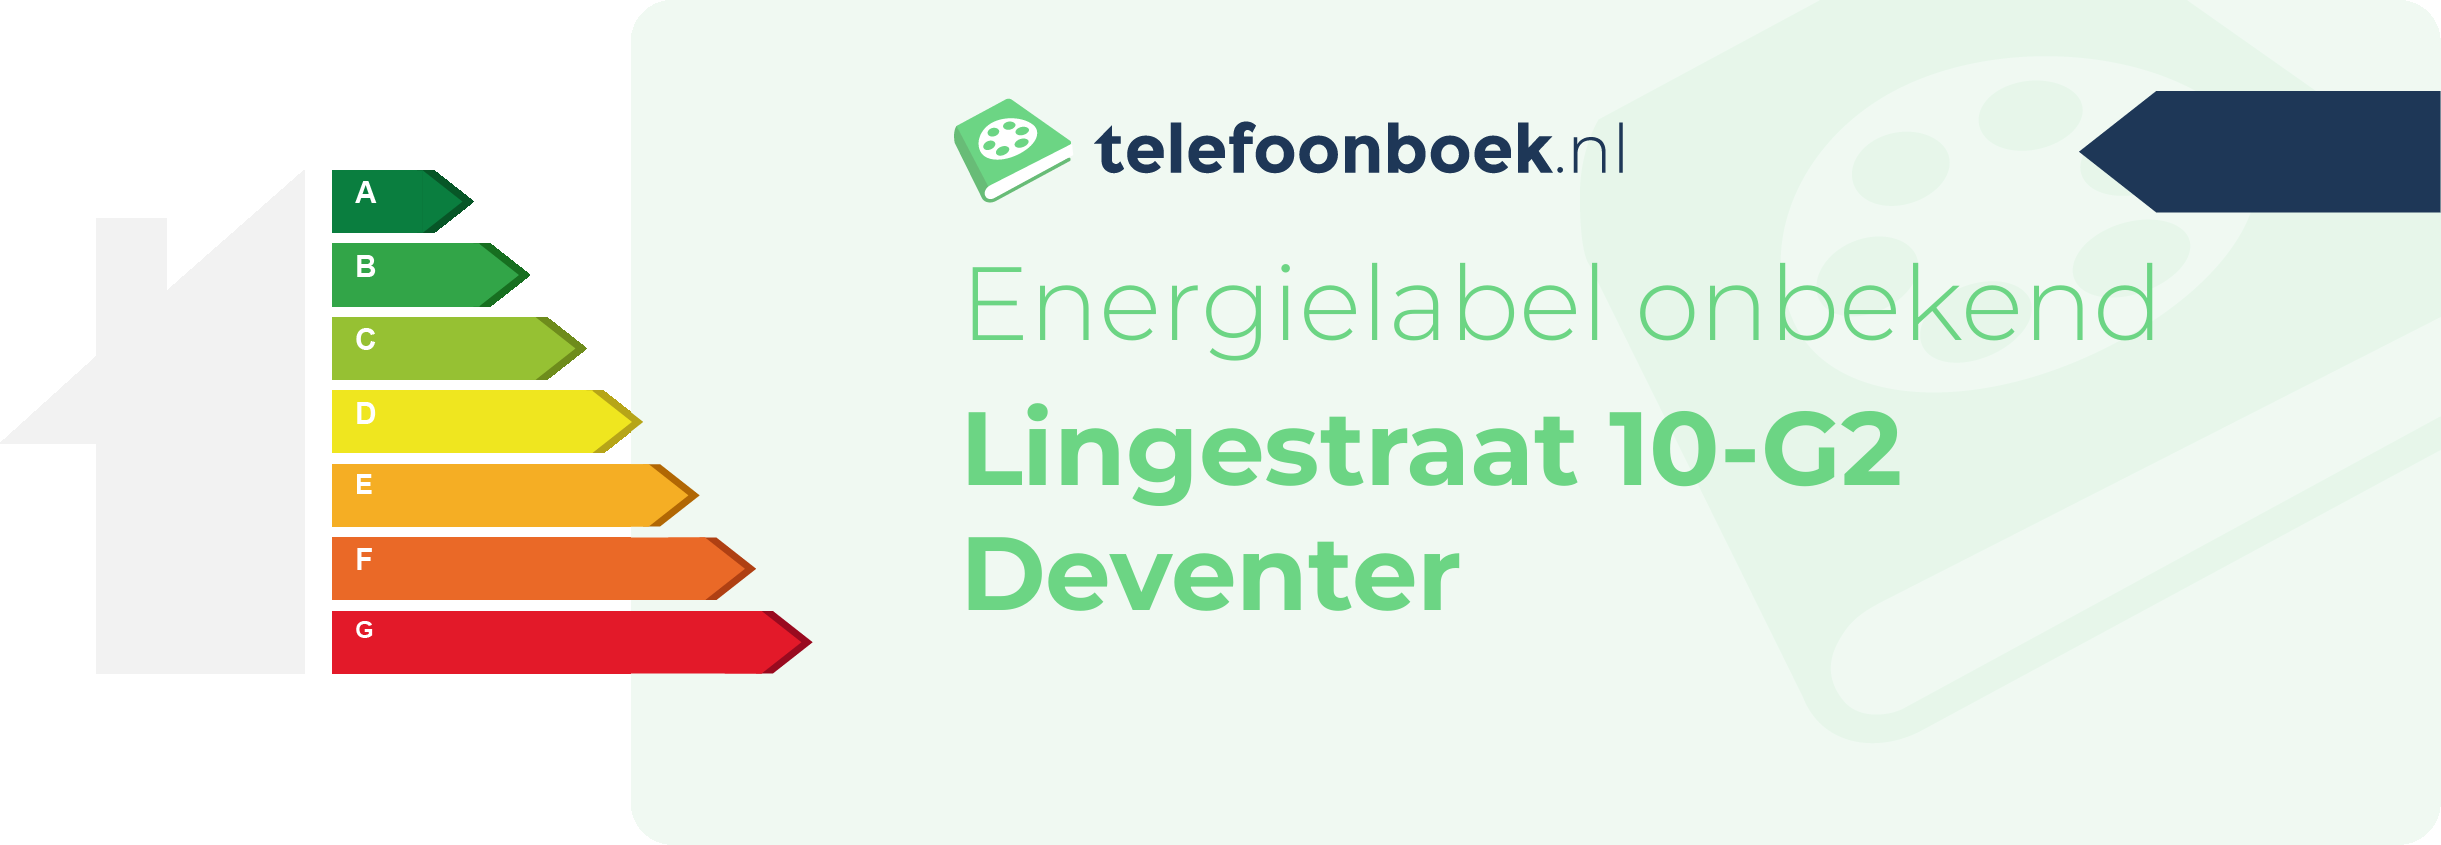 Energielabel Lingestraat 10-G2 Deventer